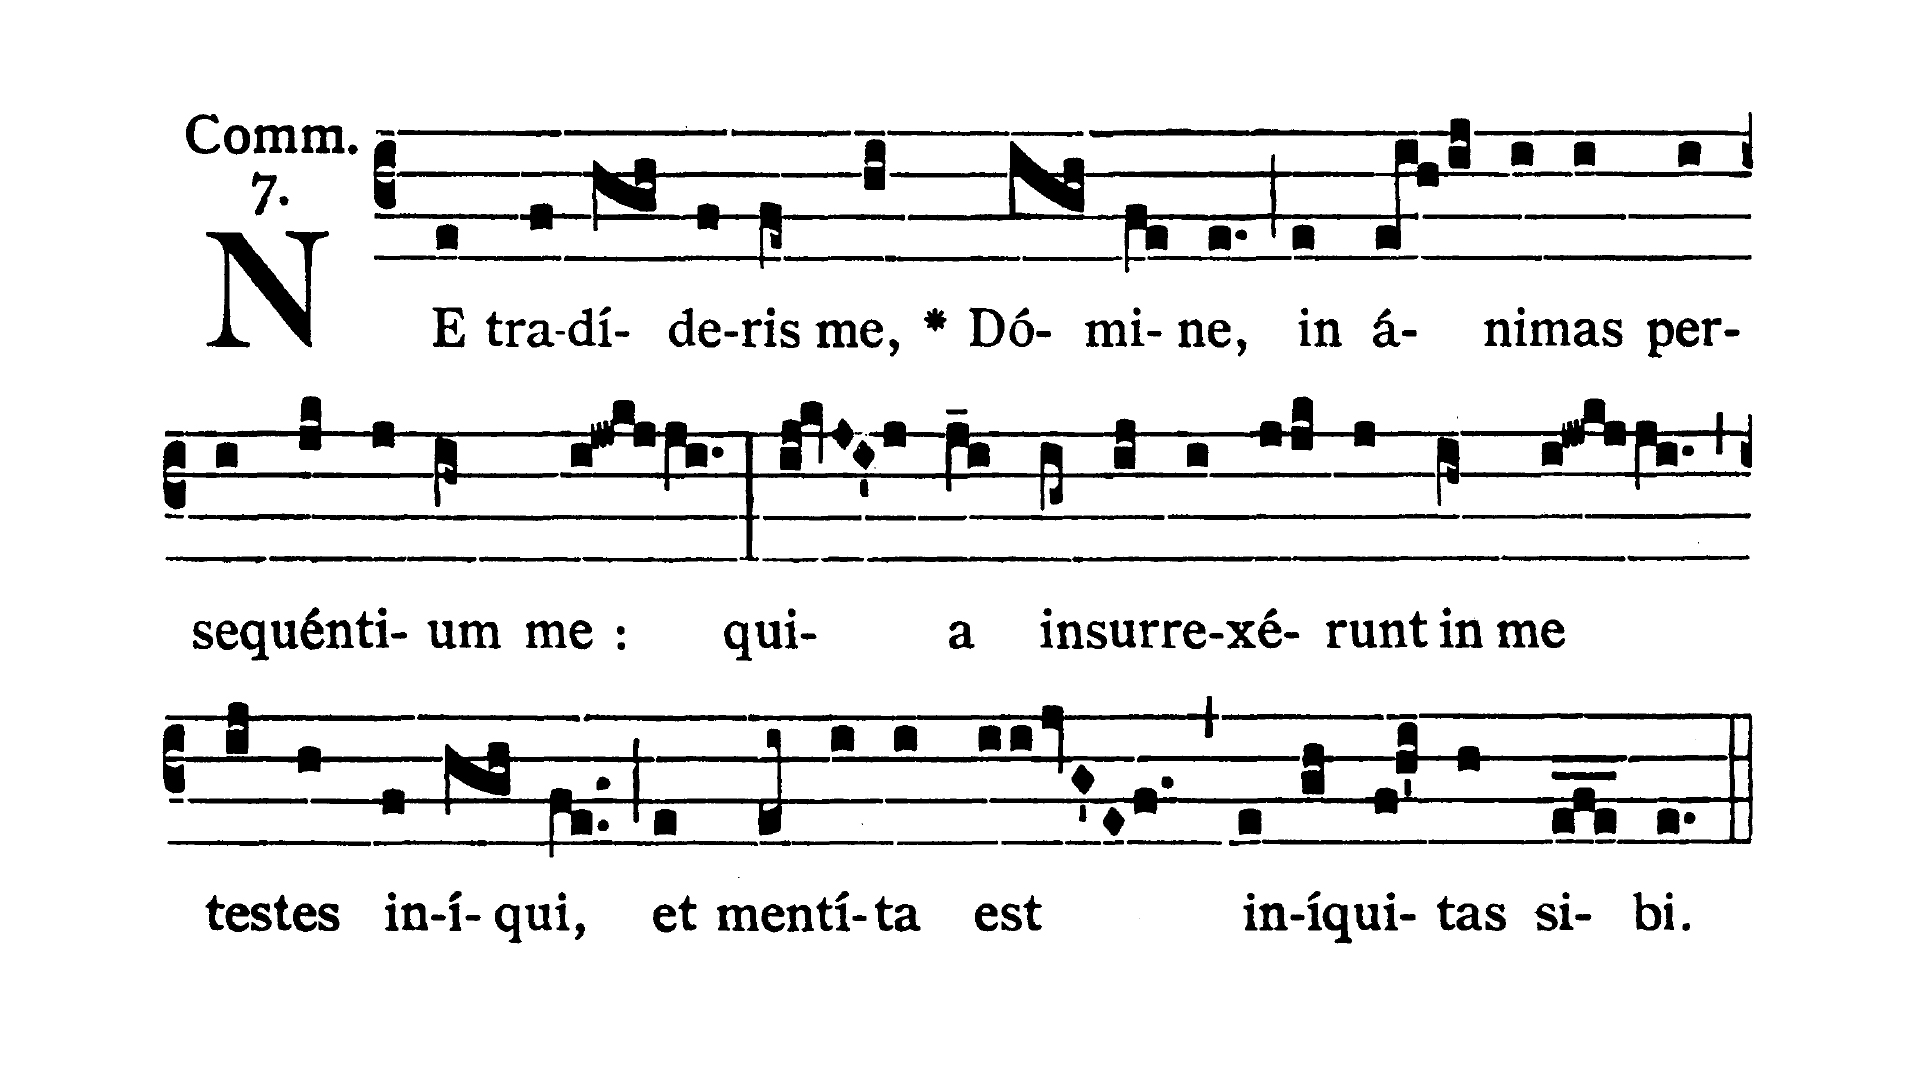 Sabbato post Dominicam I Passionis (Saturday after Passion Sunday) - Communio (Ne tradideris me)